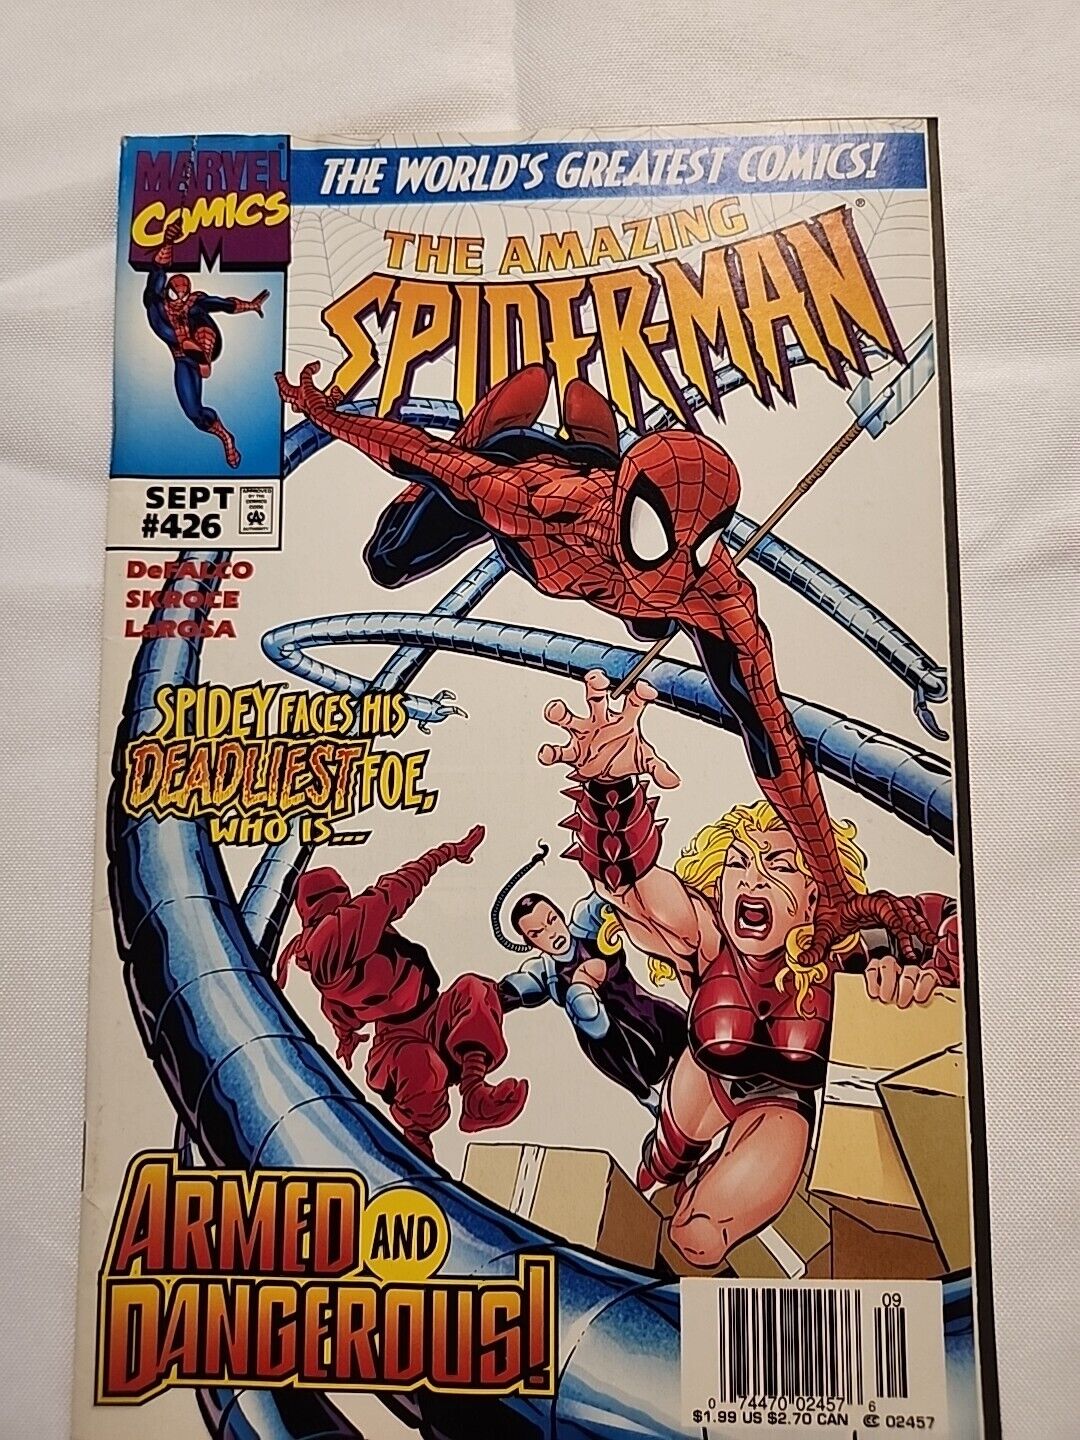 The Amazing Spider-Man #426 (Marvel Comics September 1997)